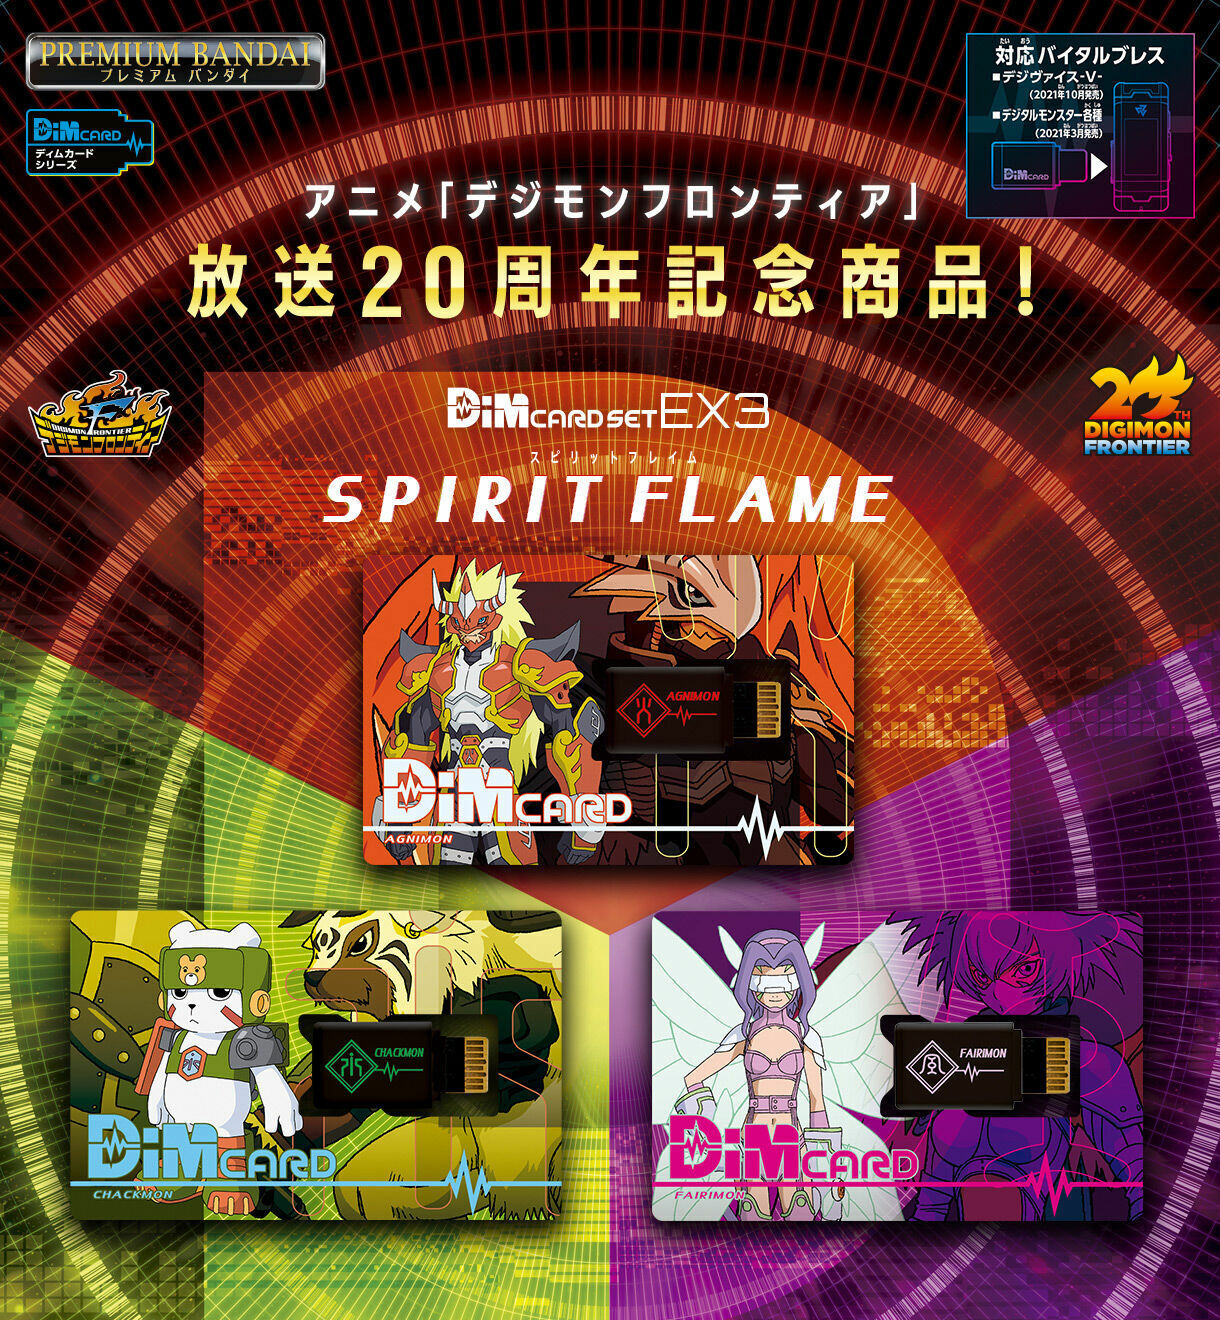 ⭐️Dim Card Set EX3 Digimon Frontier SPIRIT FLAME Vital Bracelet Agnimon